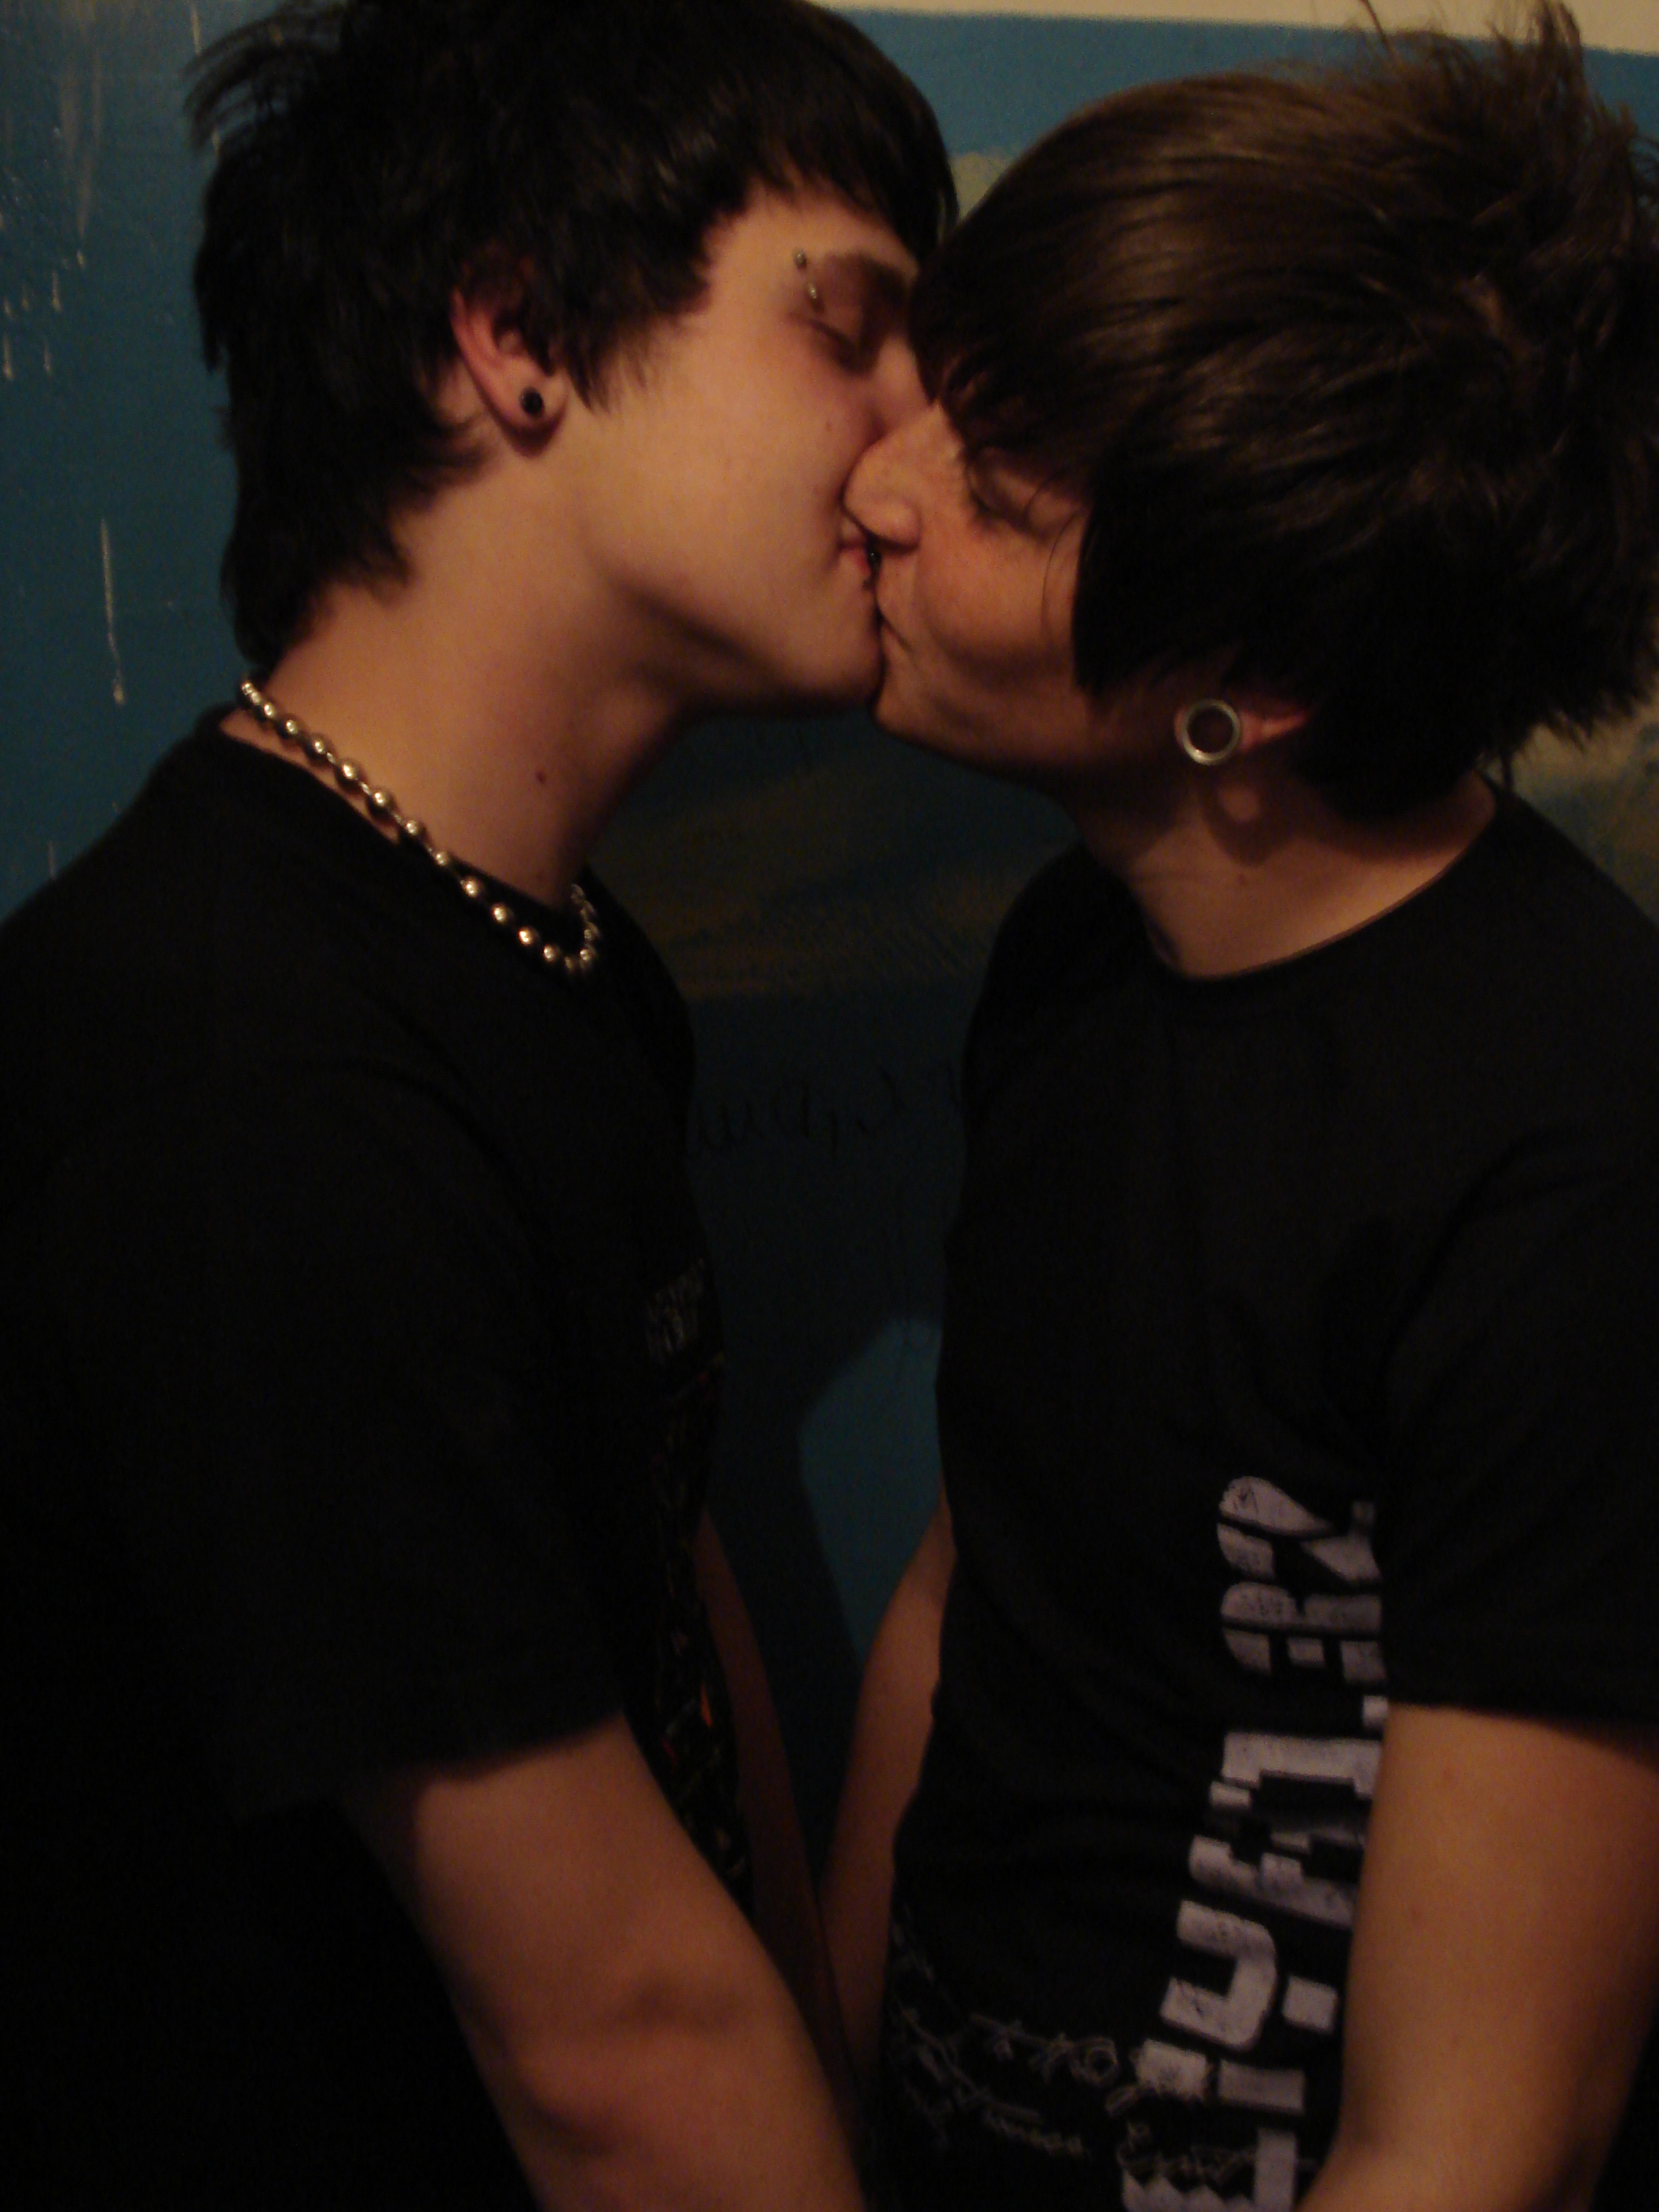 фото мальчики геи целуются фото фото 41